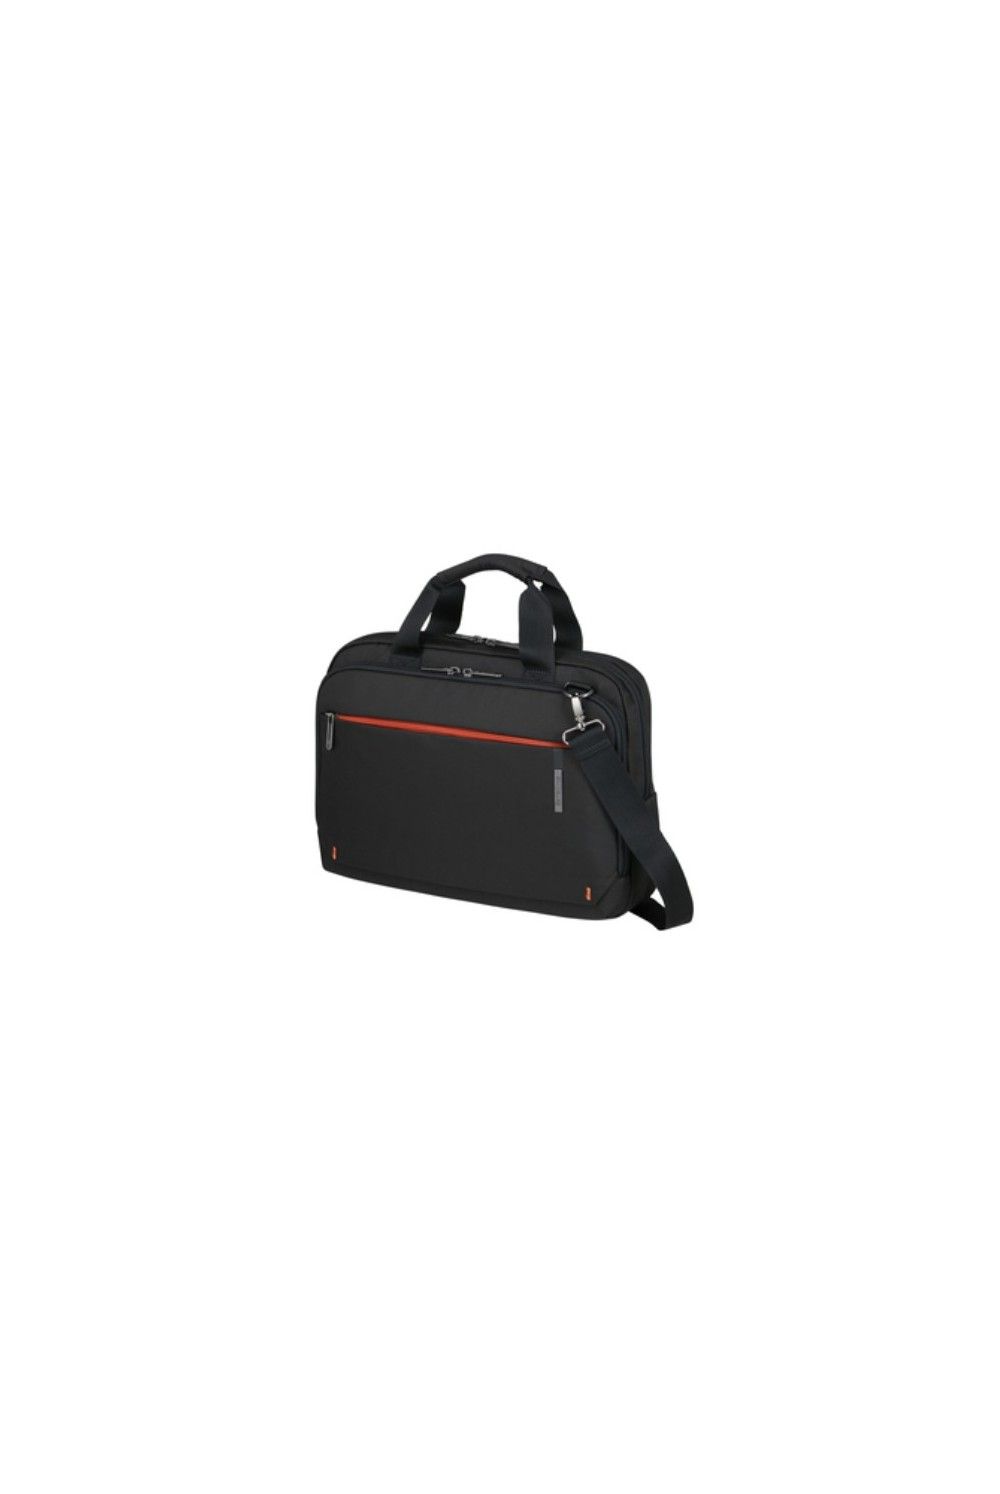 Samsonite laptop bag Network 4 14 inches black